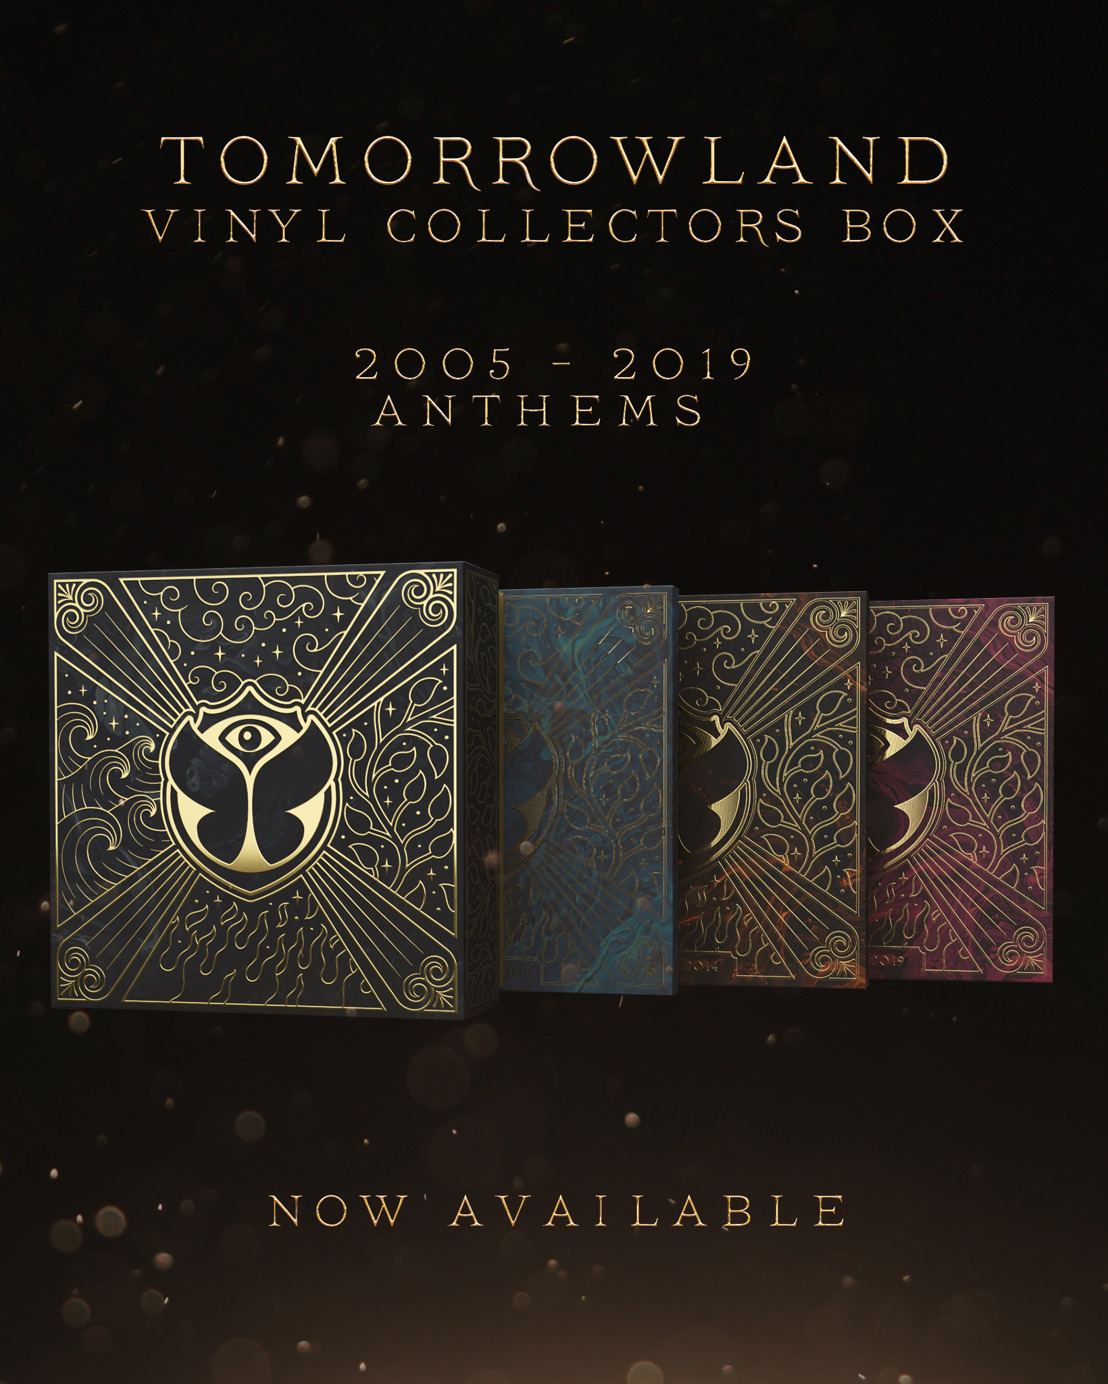 Tomorrowland releases Vinyl Collectors Box